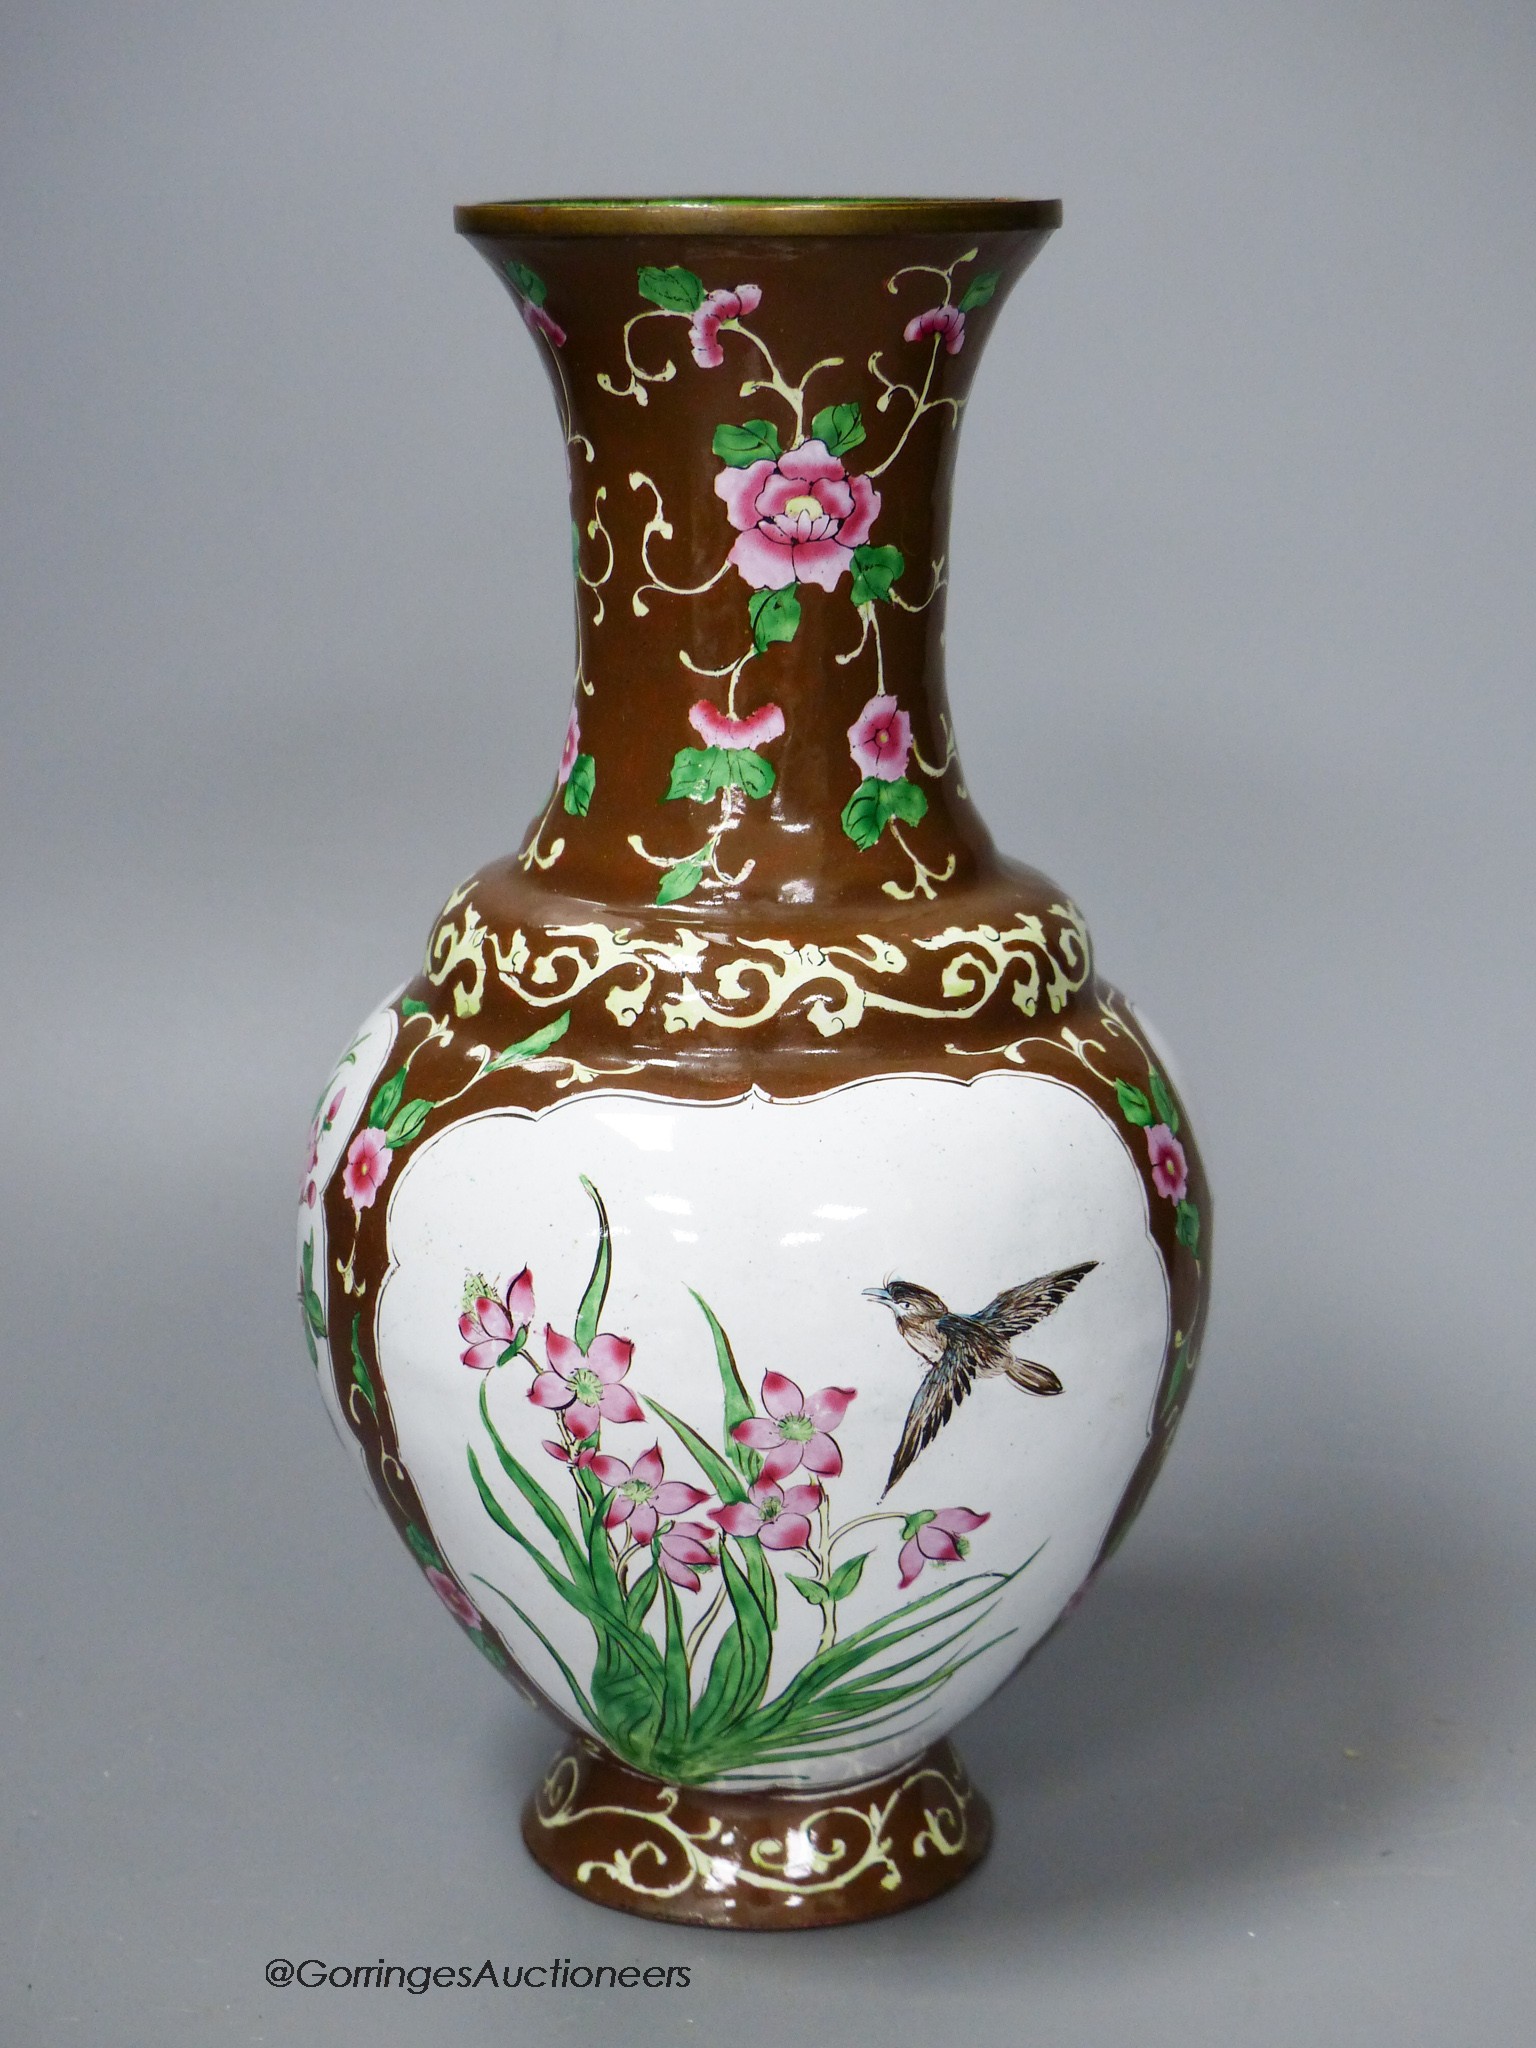 A Chinese Canton enamel vase, 20th century, 23cm high